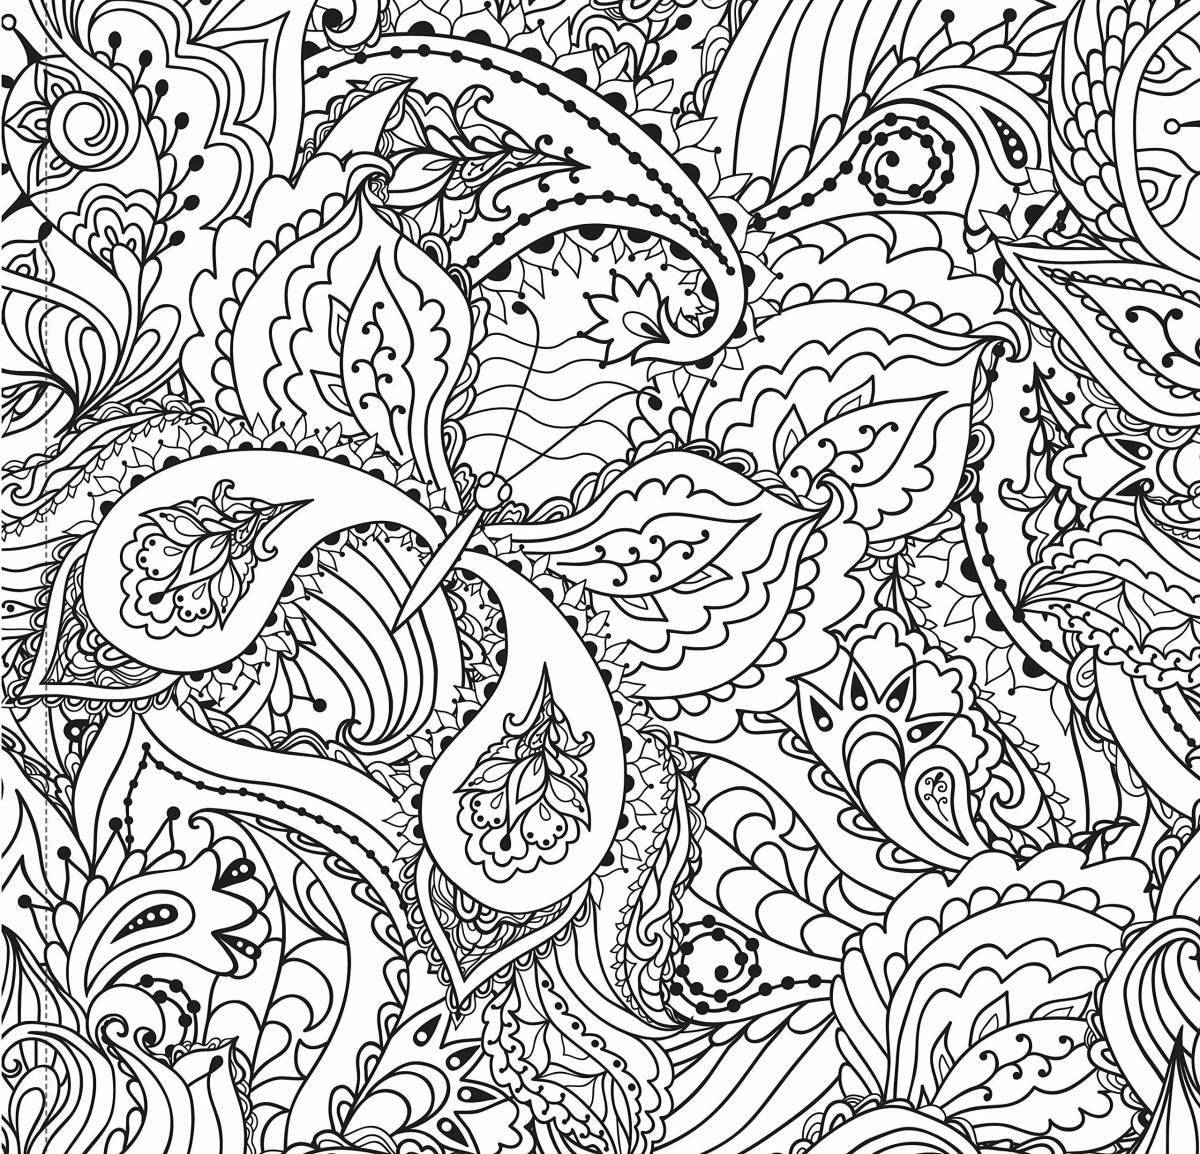 Coloring book intricate patterns - splendid